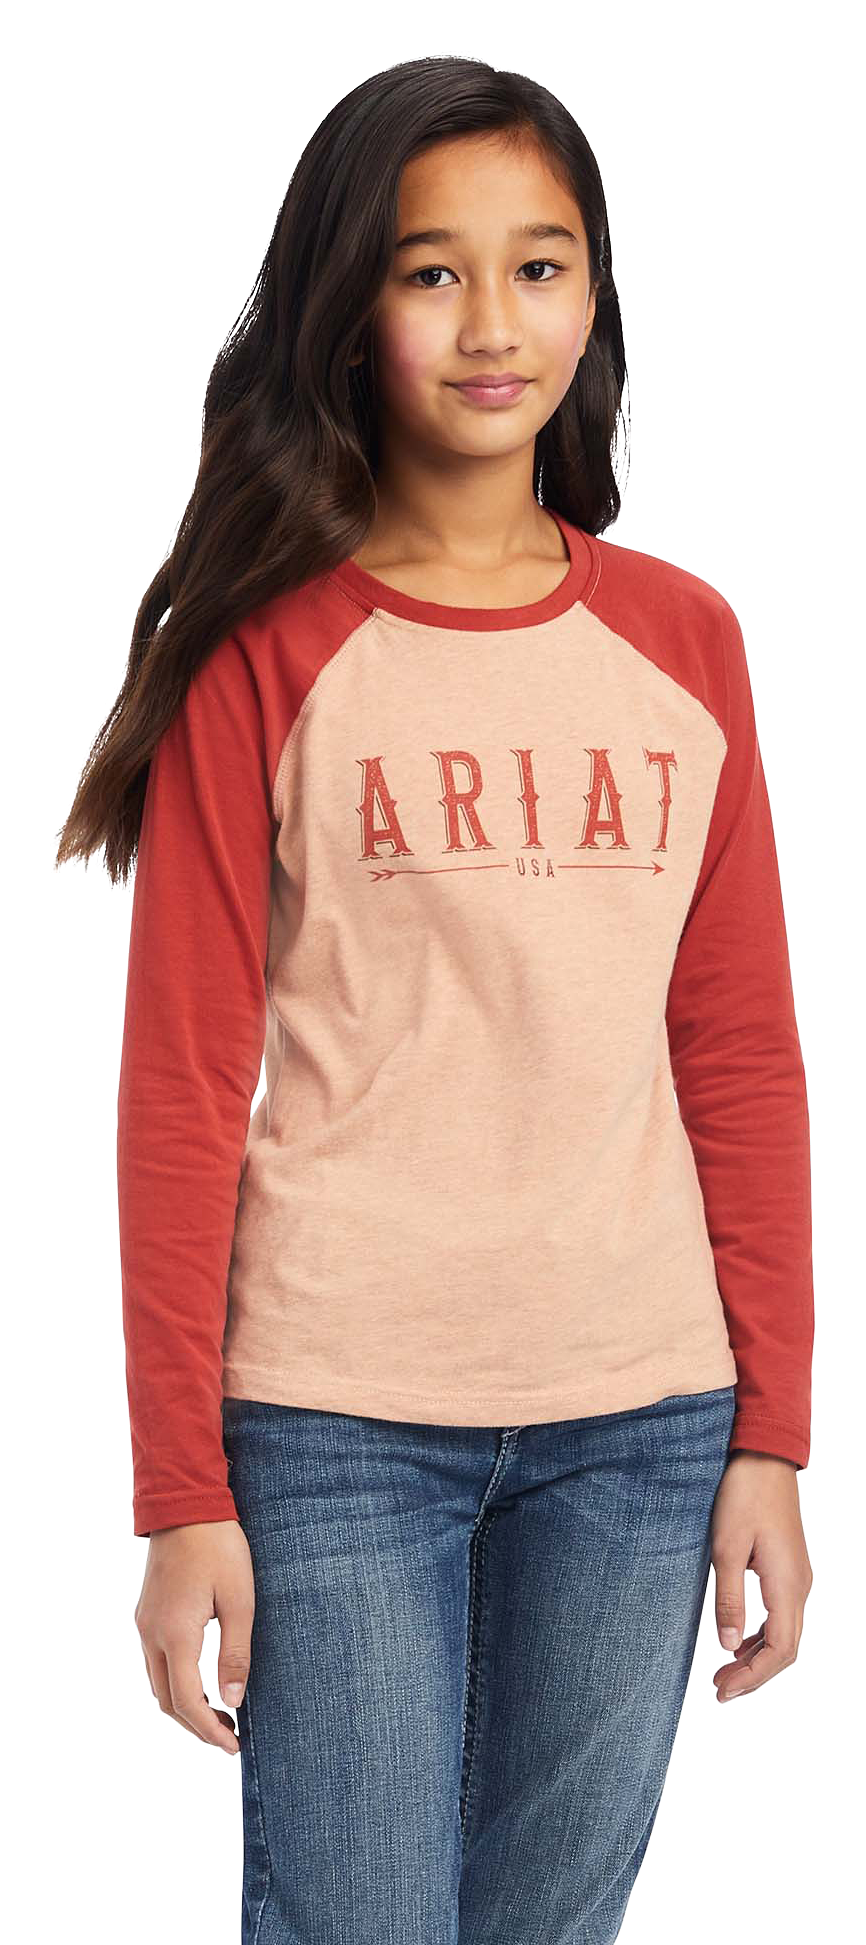 Ariat R.E.A.L. Arrow Long-Sleeve T-Shirt for Girls - Palm Heather - L